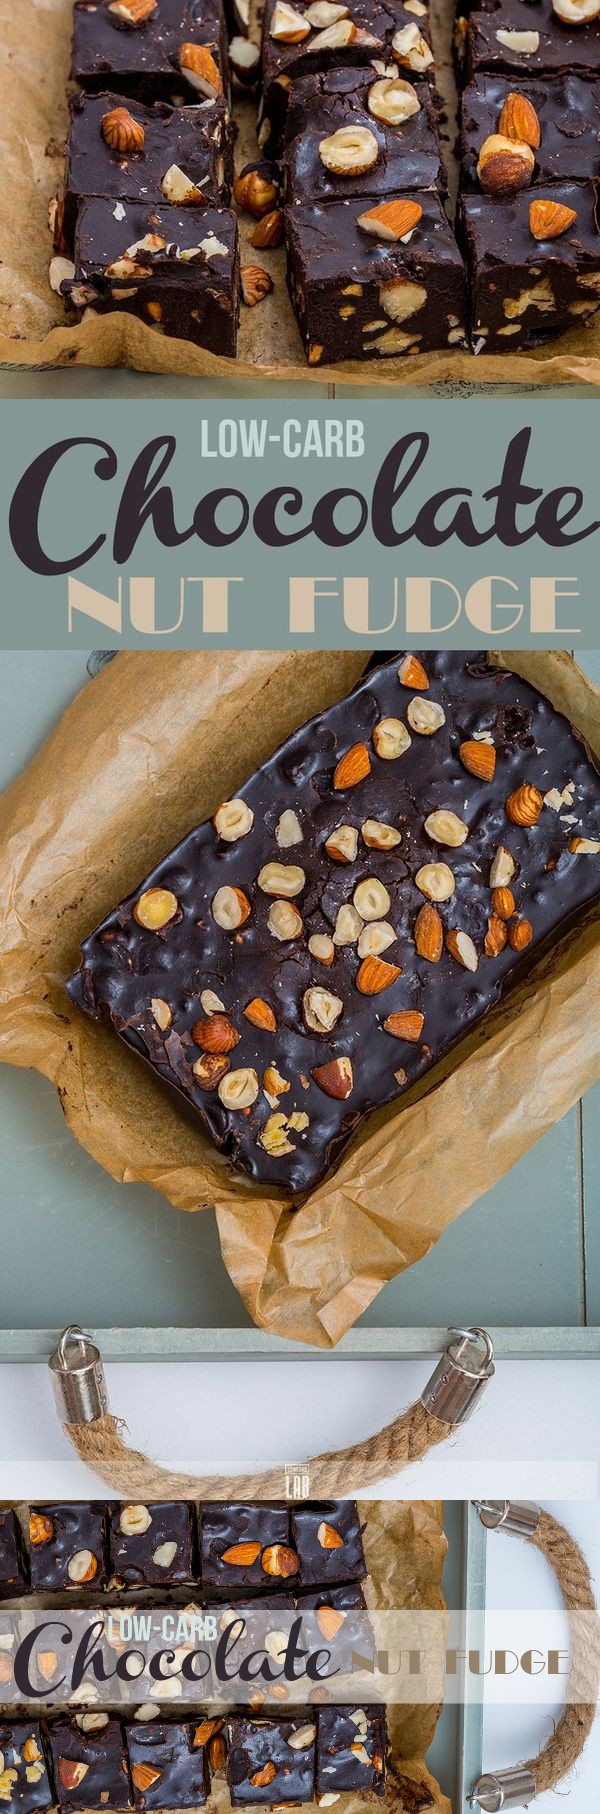 Chocolate-Nut Fudge